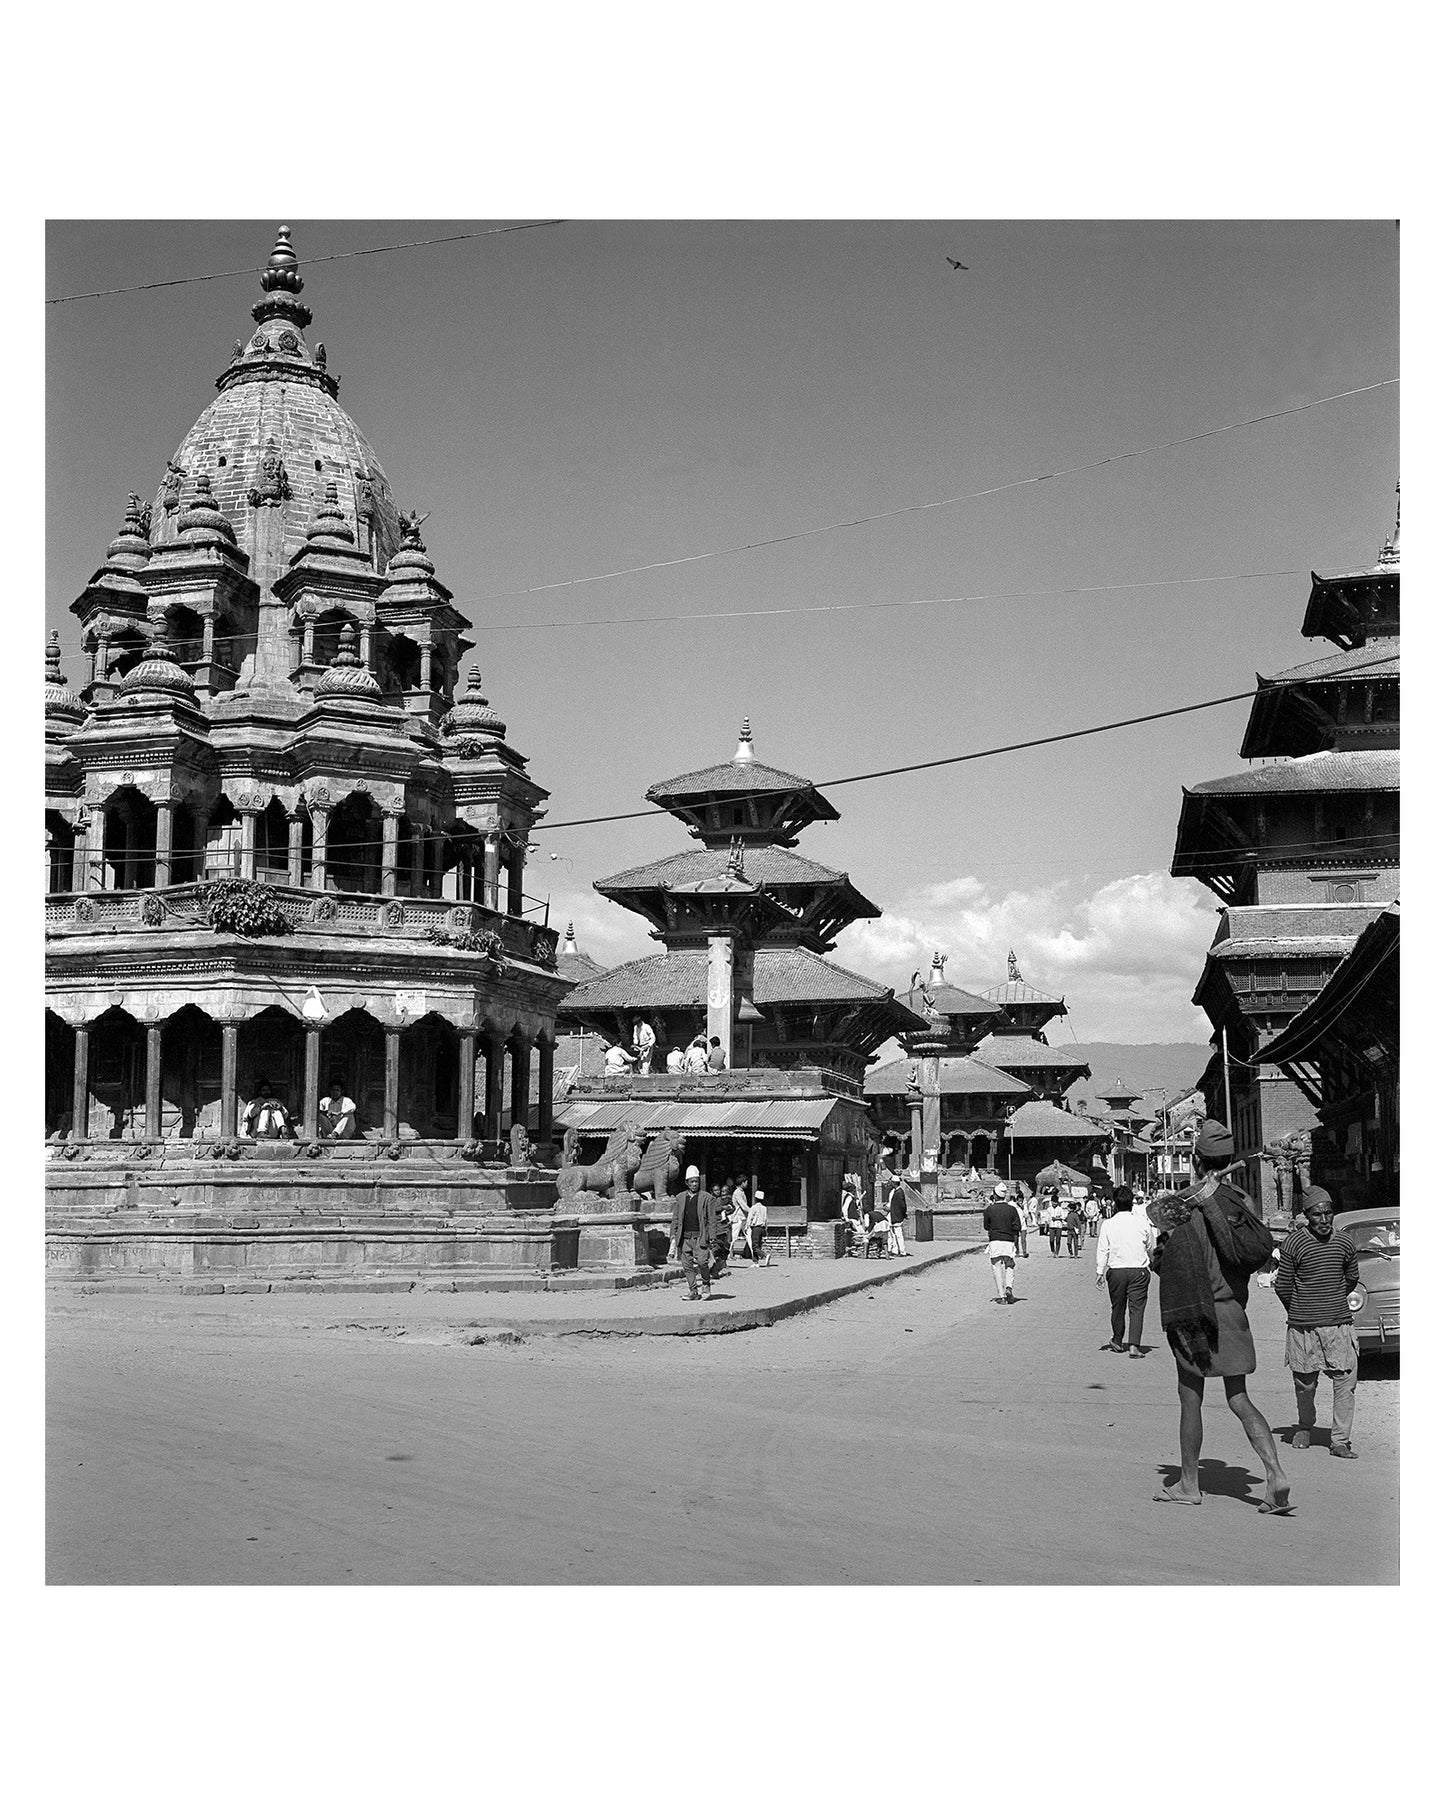 Krishna temple- Nepal Patan darbar square (ancient city of lalitpur)